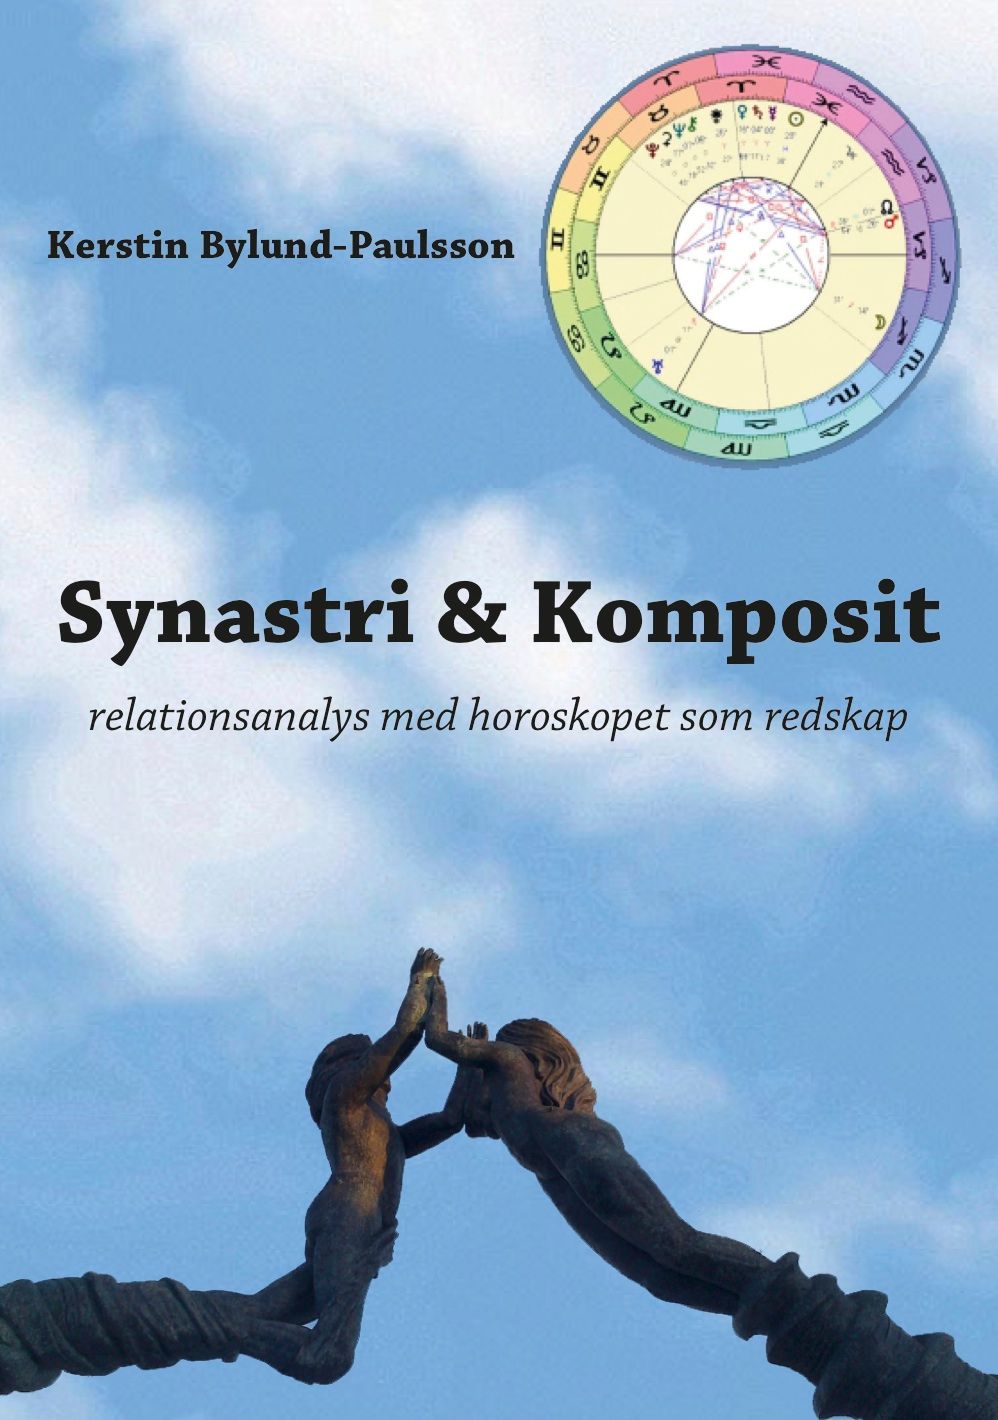 SYNASTRI OCH KOMPOSIT, e-bok av Kerstin Bylund-Paulsson